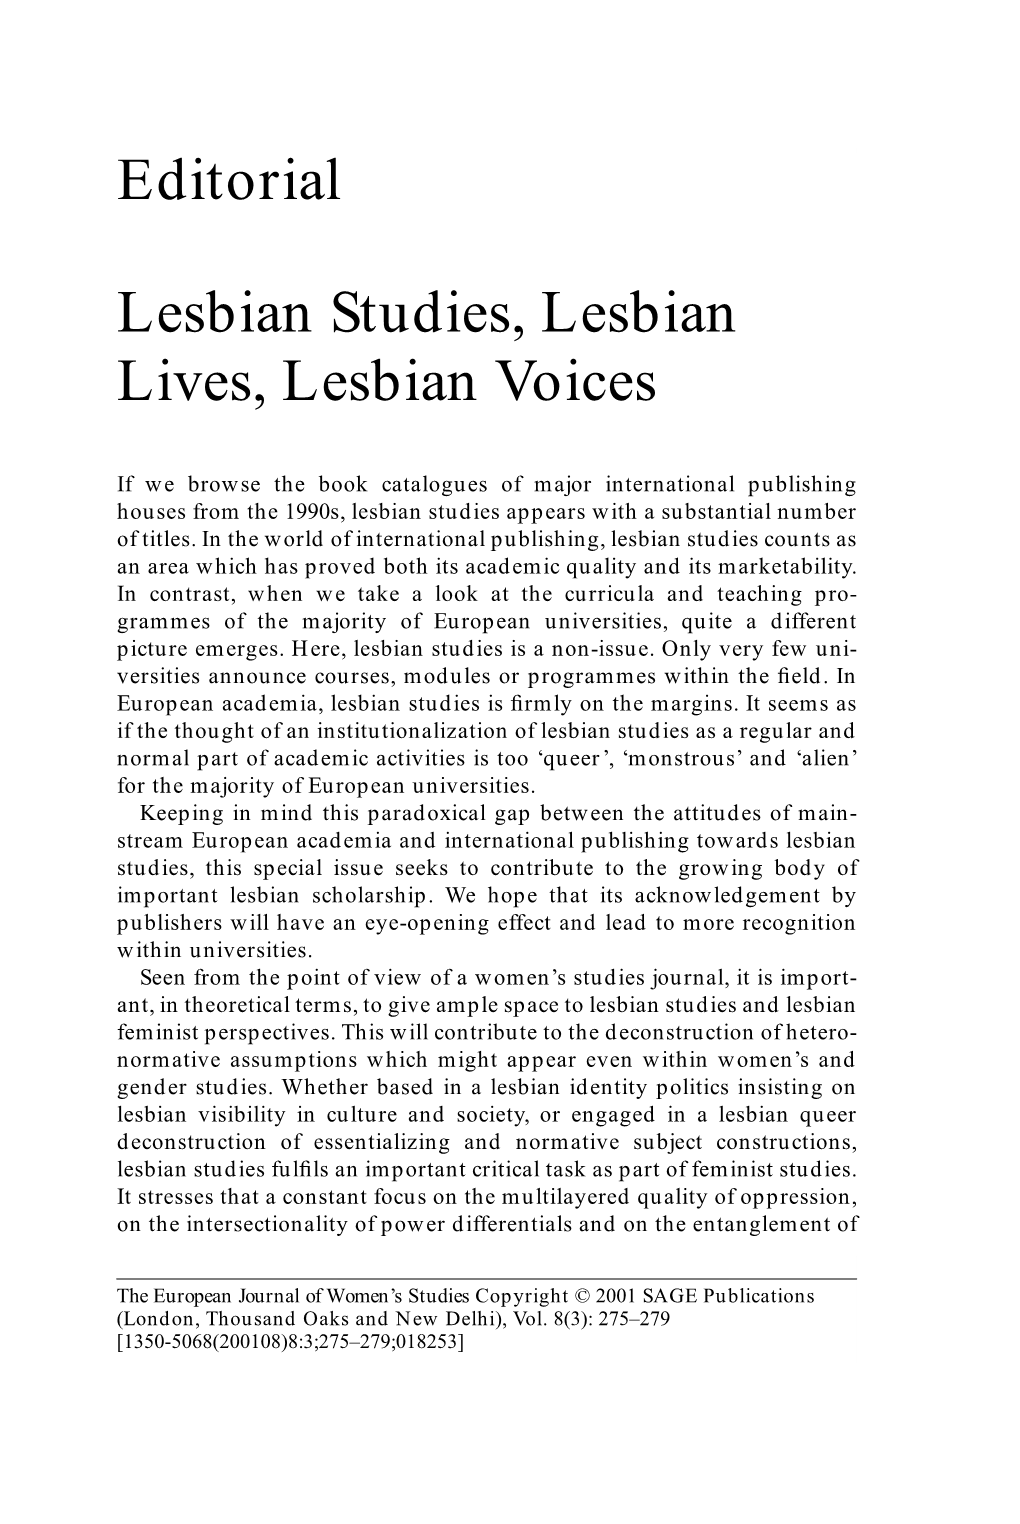 Editorial Lesbian Studies, Lesbian Lives, Lesbian Voices